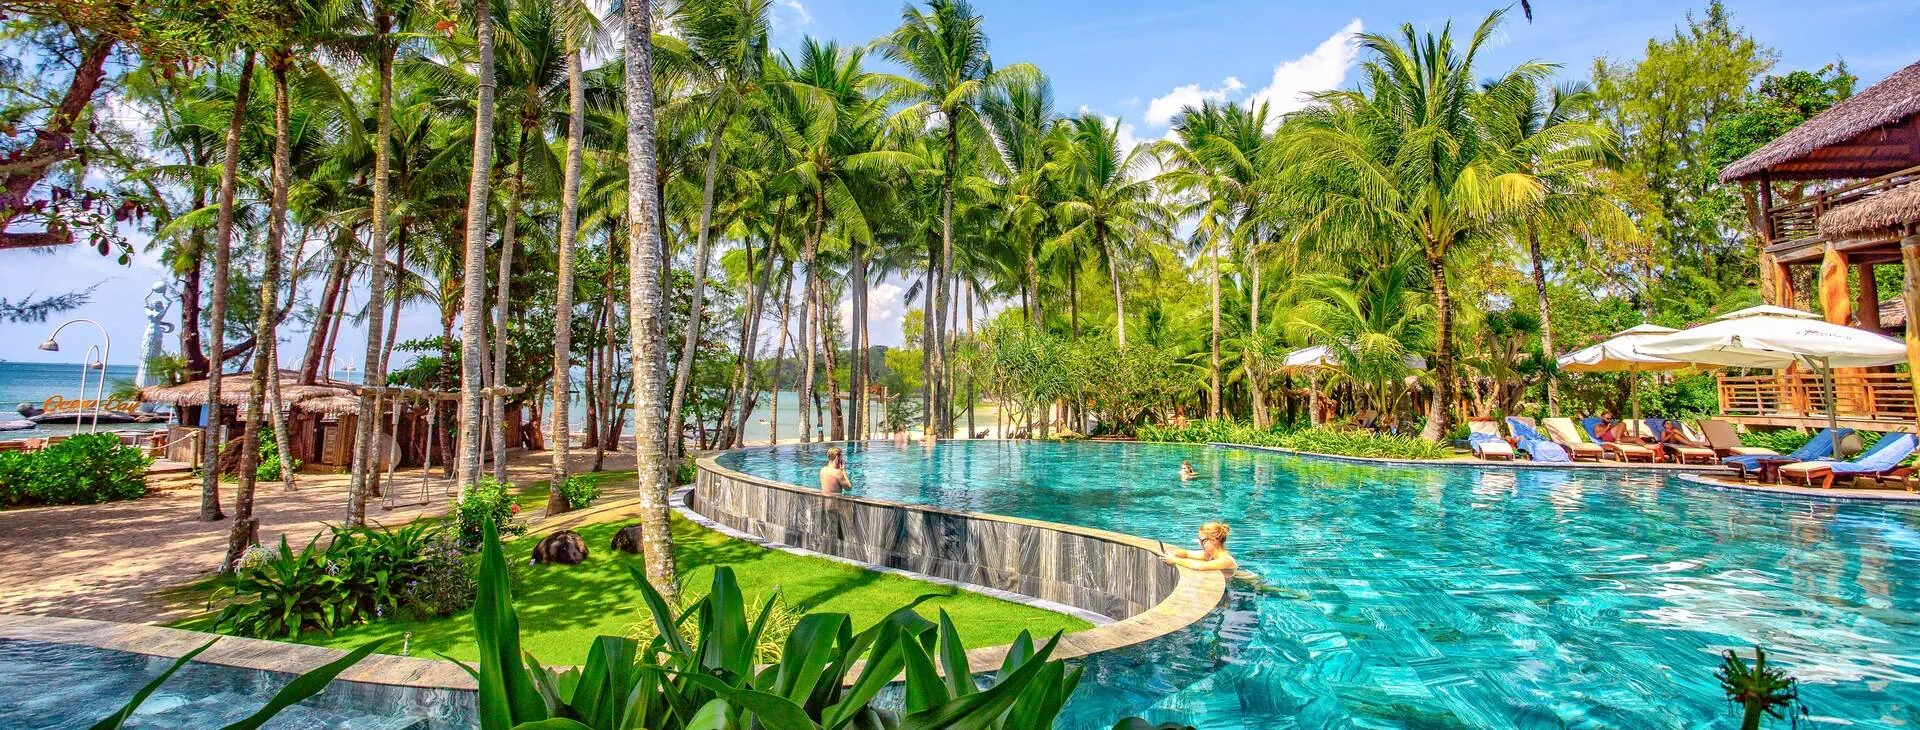 Wietnam Wyspa Phu Quoc Duong Dong Ocean Bay Phu Quoc Resort and Spa